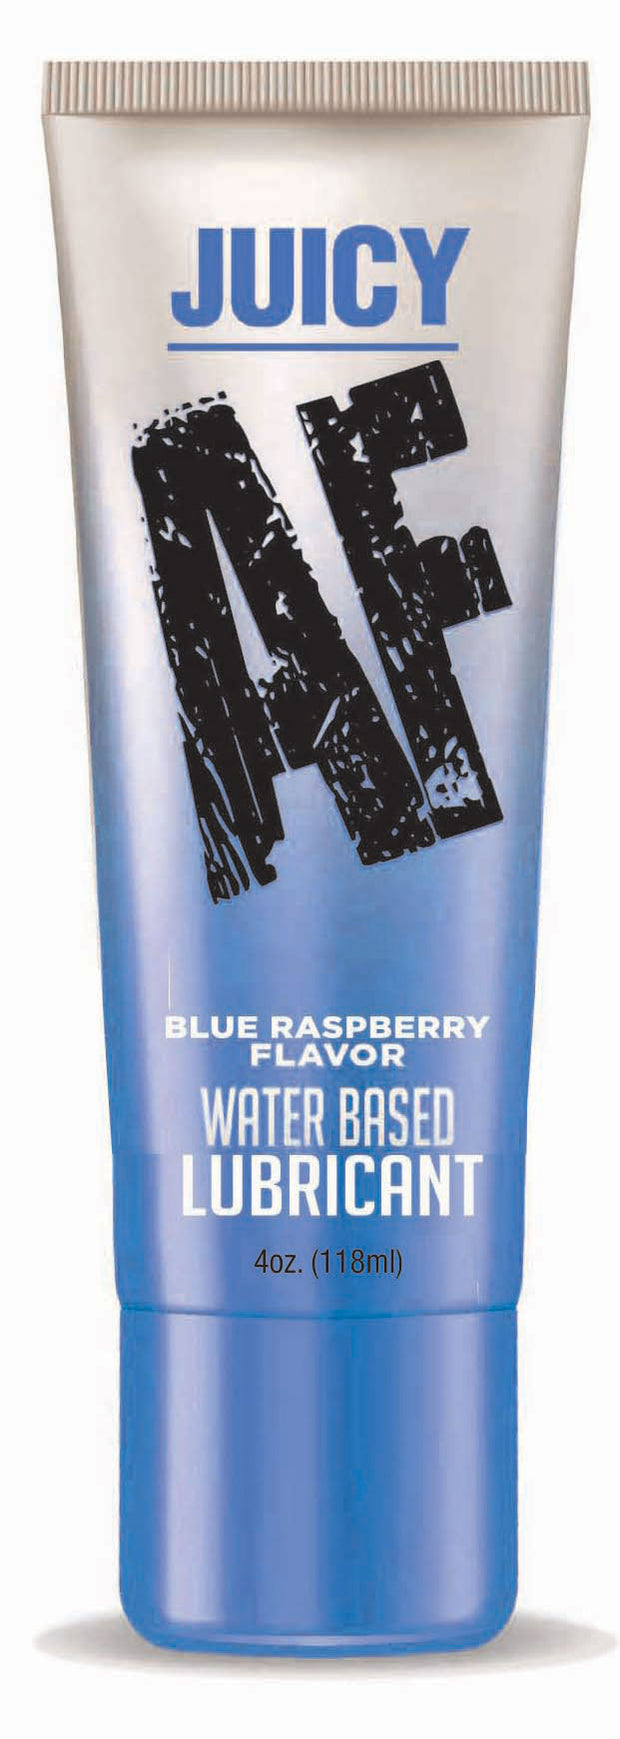 Juicy Af - Blueberry Water Based Lubricant